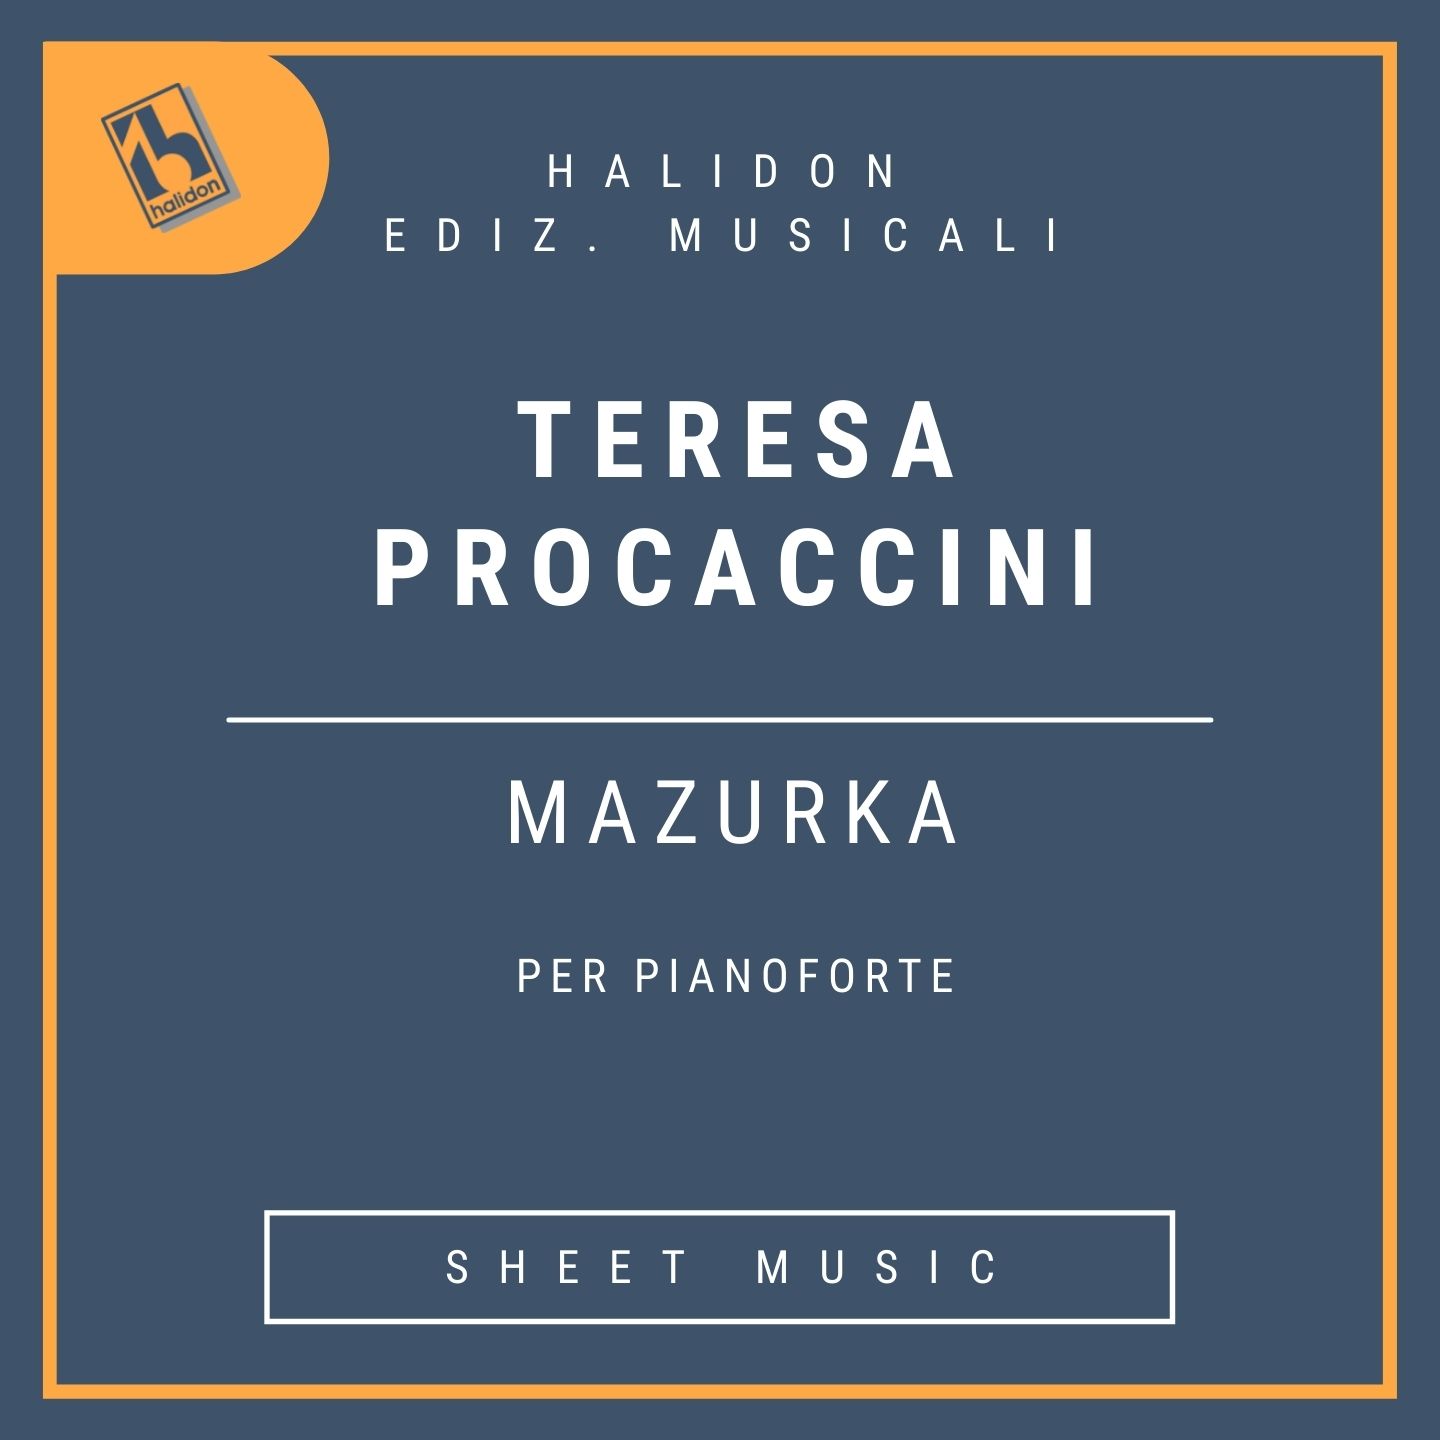 Teresa Procaccini - Mazurka